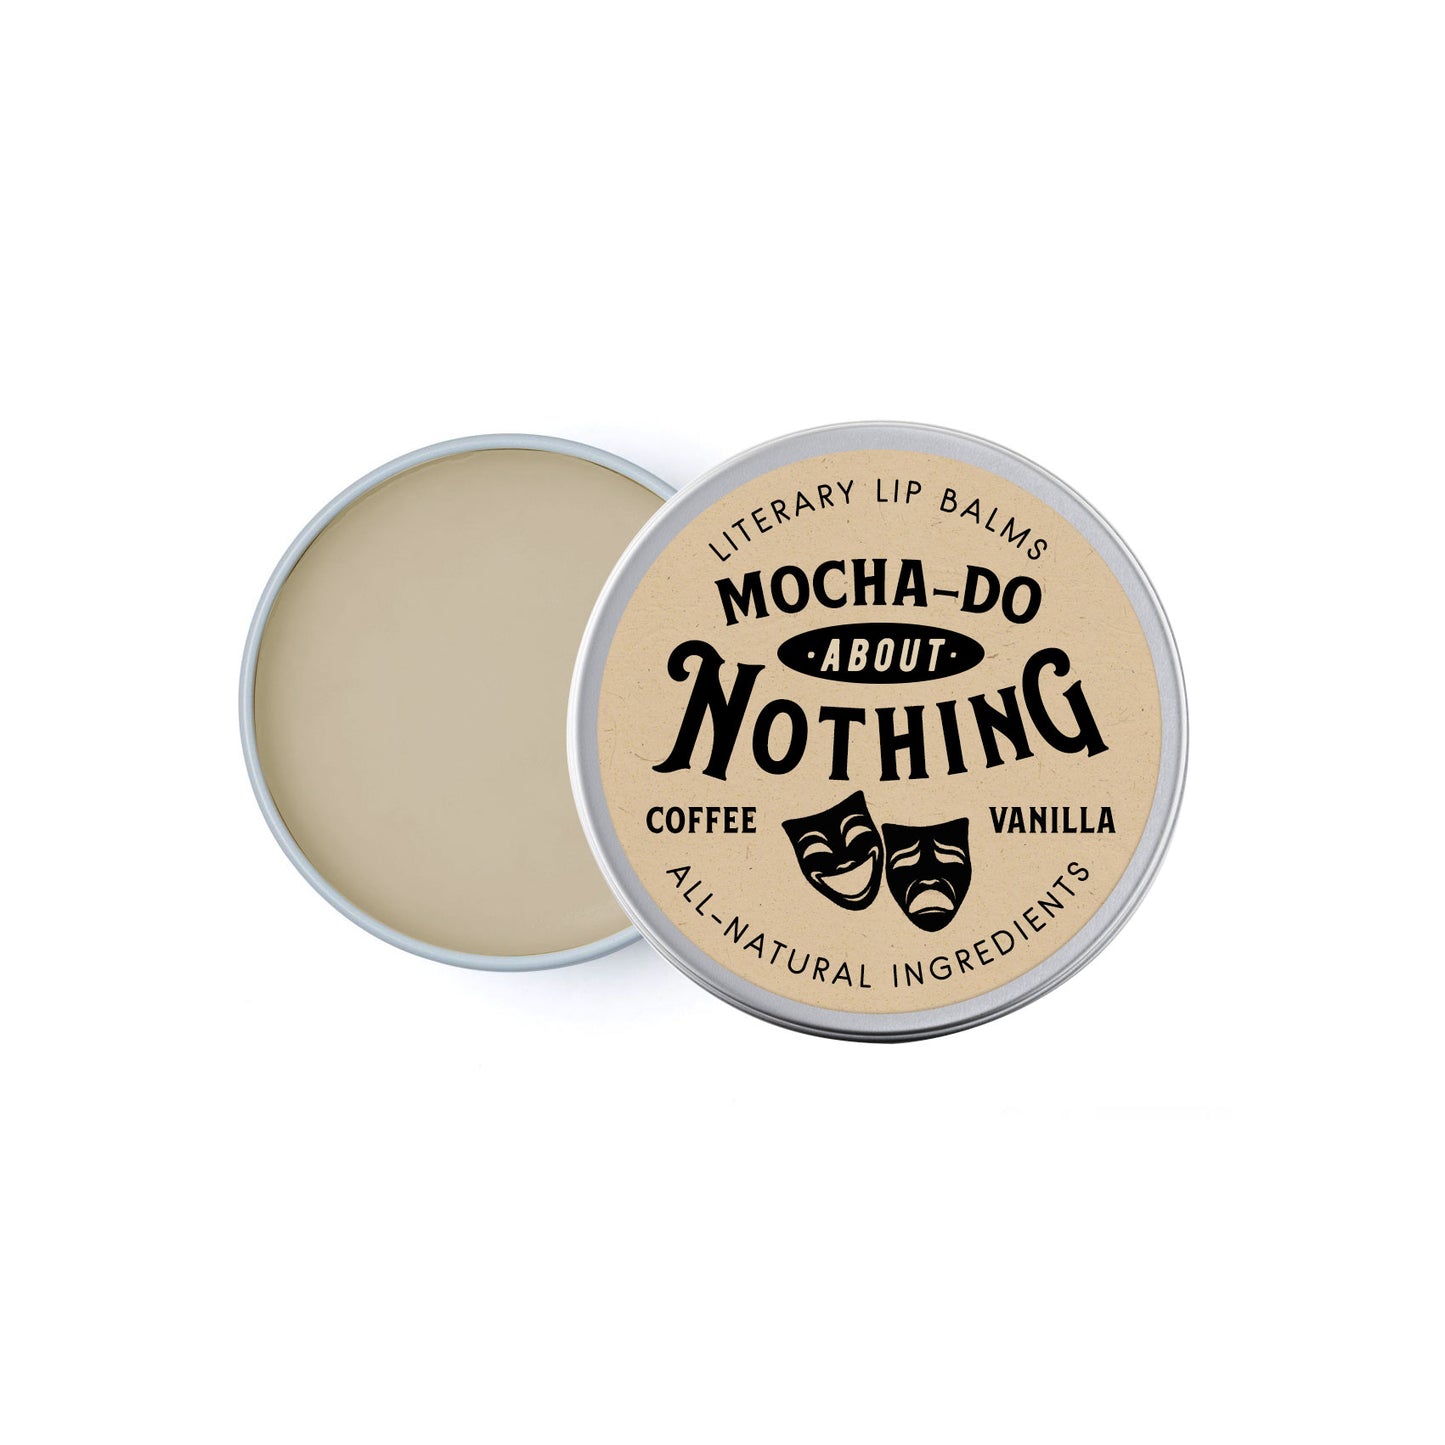 Literary Lip Balms: Mocha-do About Nothing